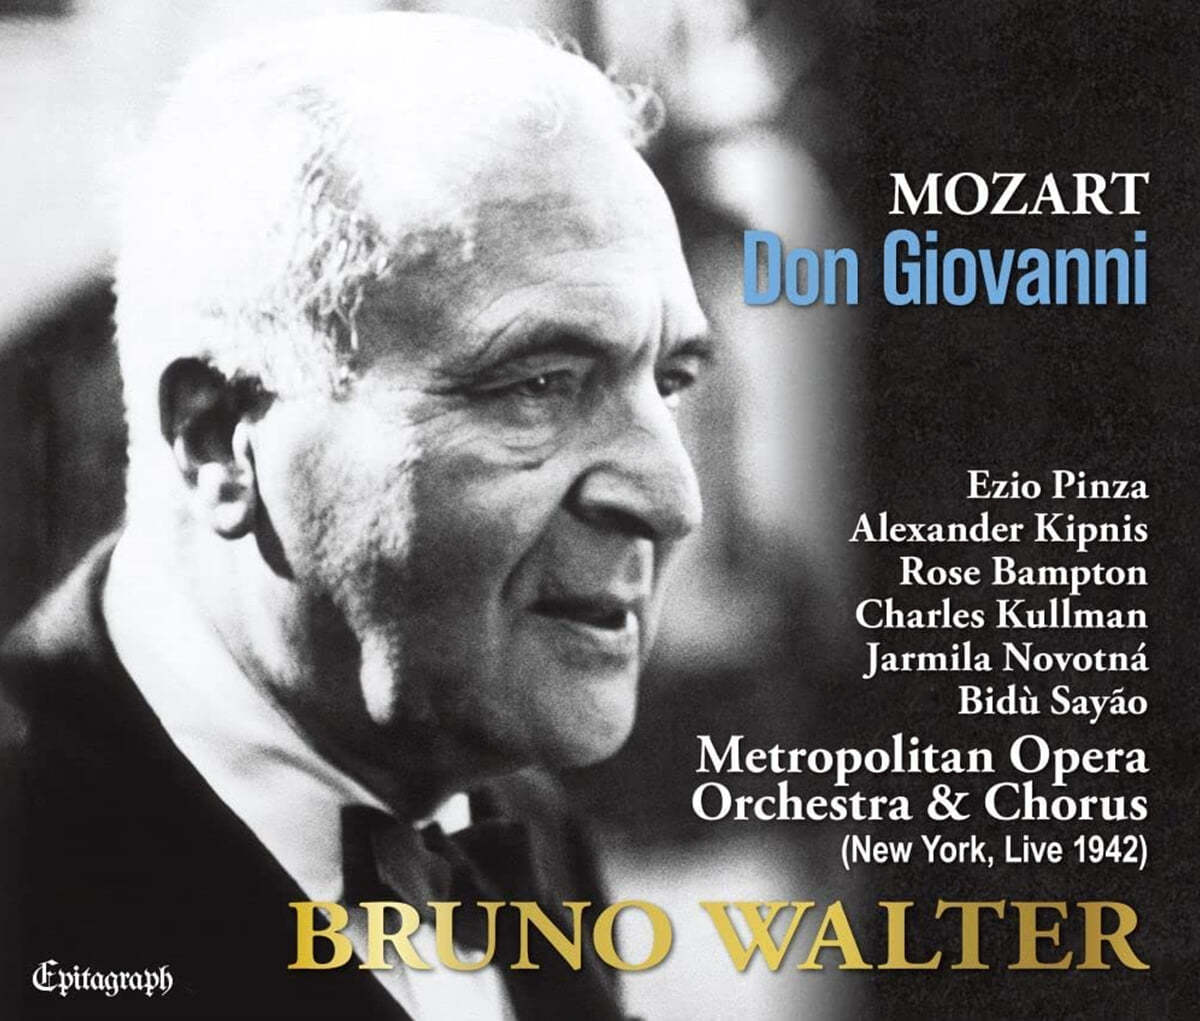 Bruno Walter 모차르트: 오페라 '돈 조반니' - 브루노 발터 (Mozart: Don Giovanni)